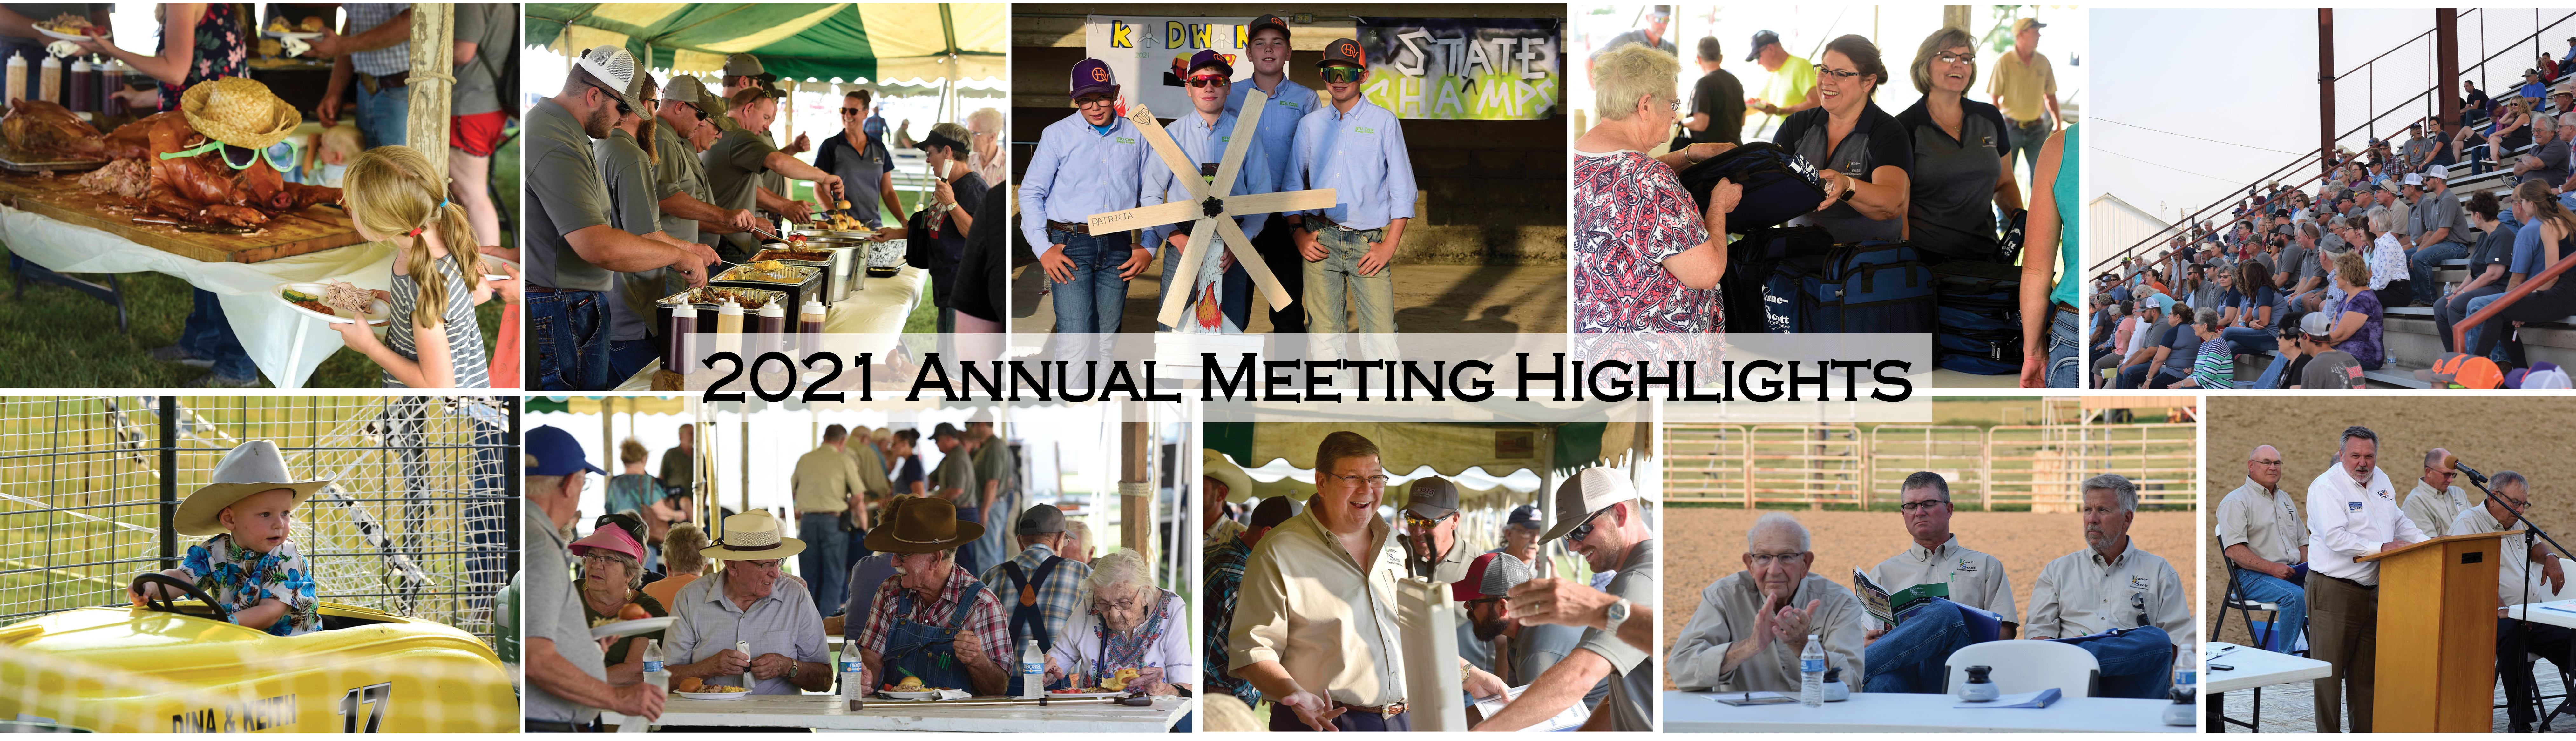 Annual Meeting Highlights